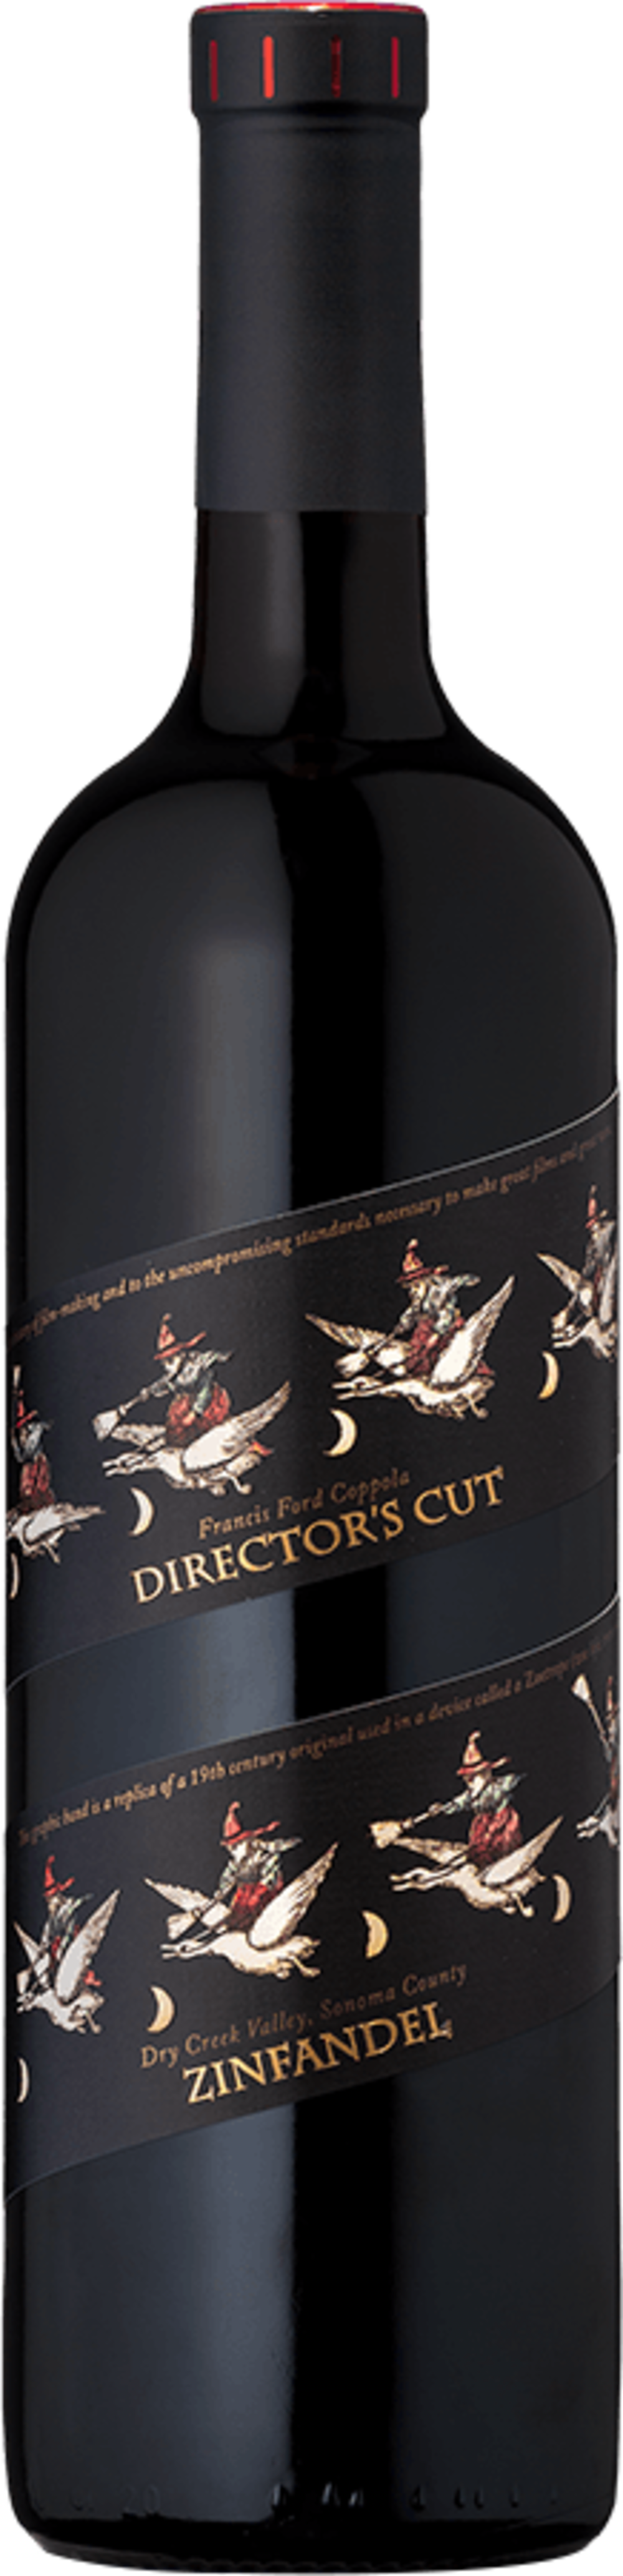 Rượu vang đỏ Mỹ, Francis Coppola, Director’s Cut, Zinfandel